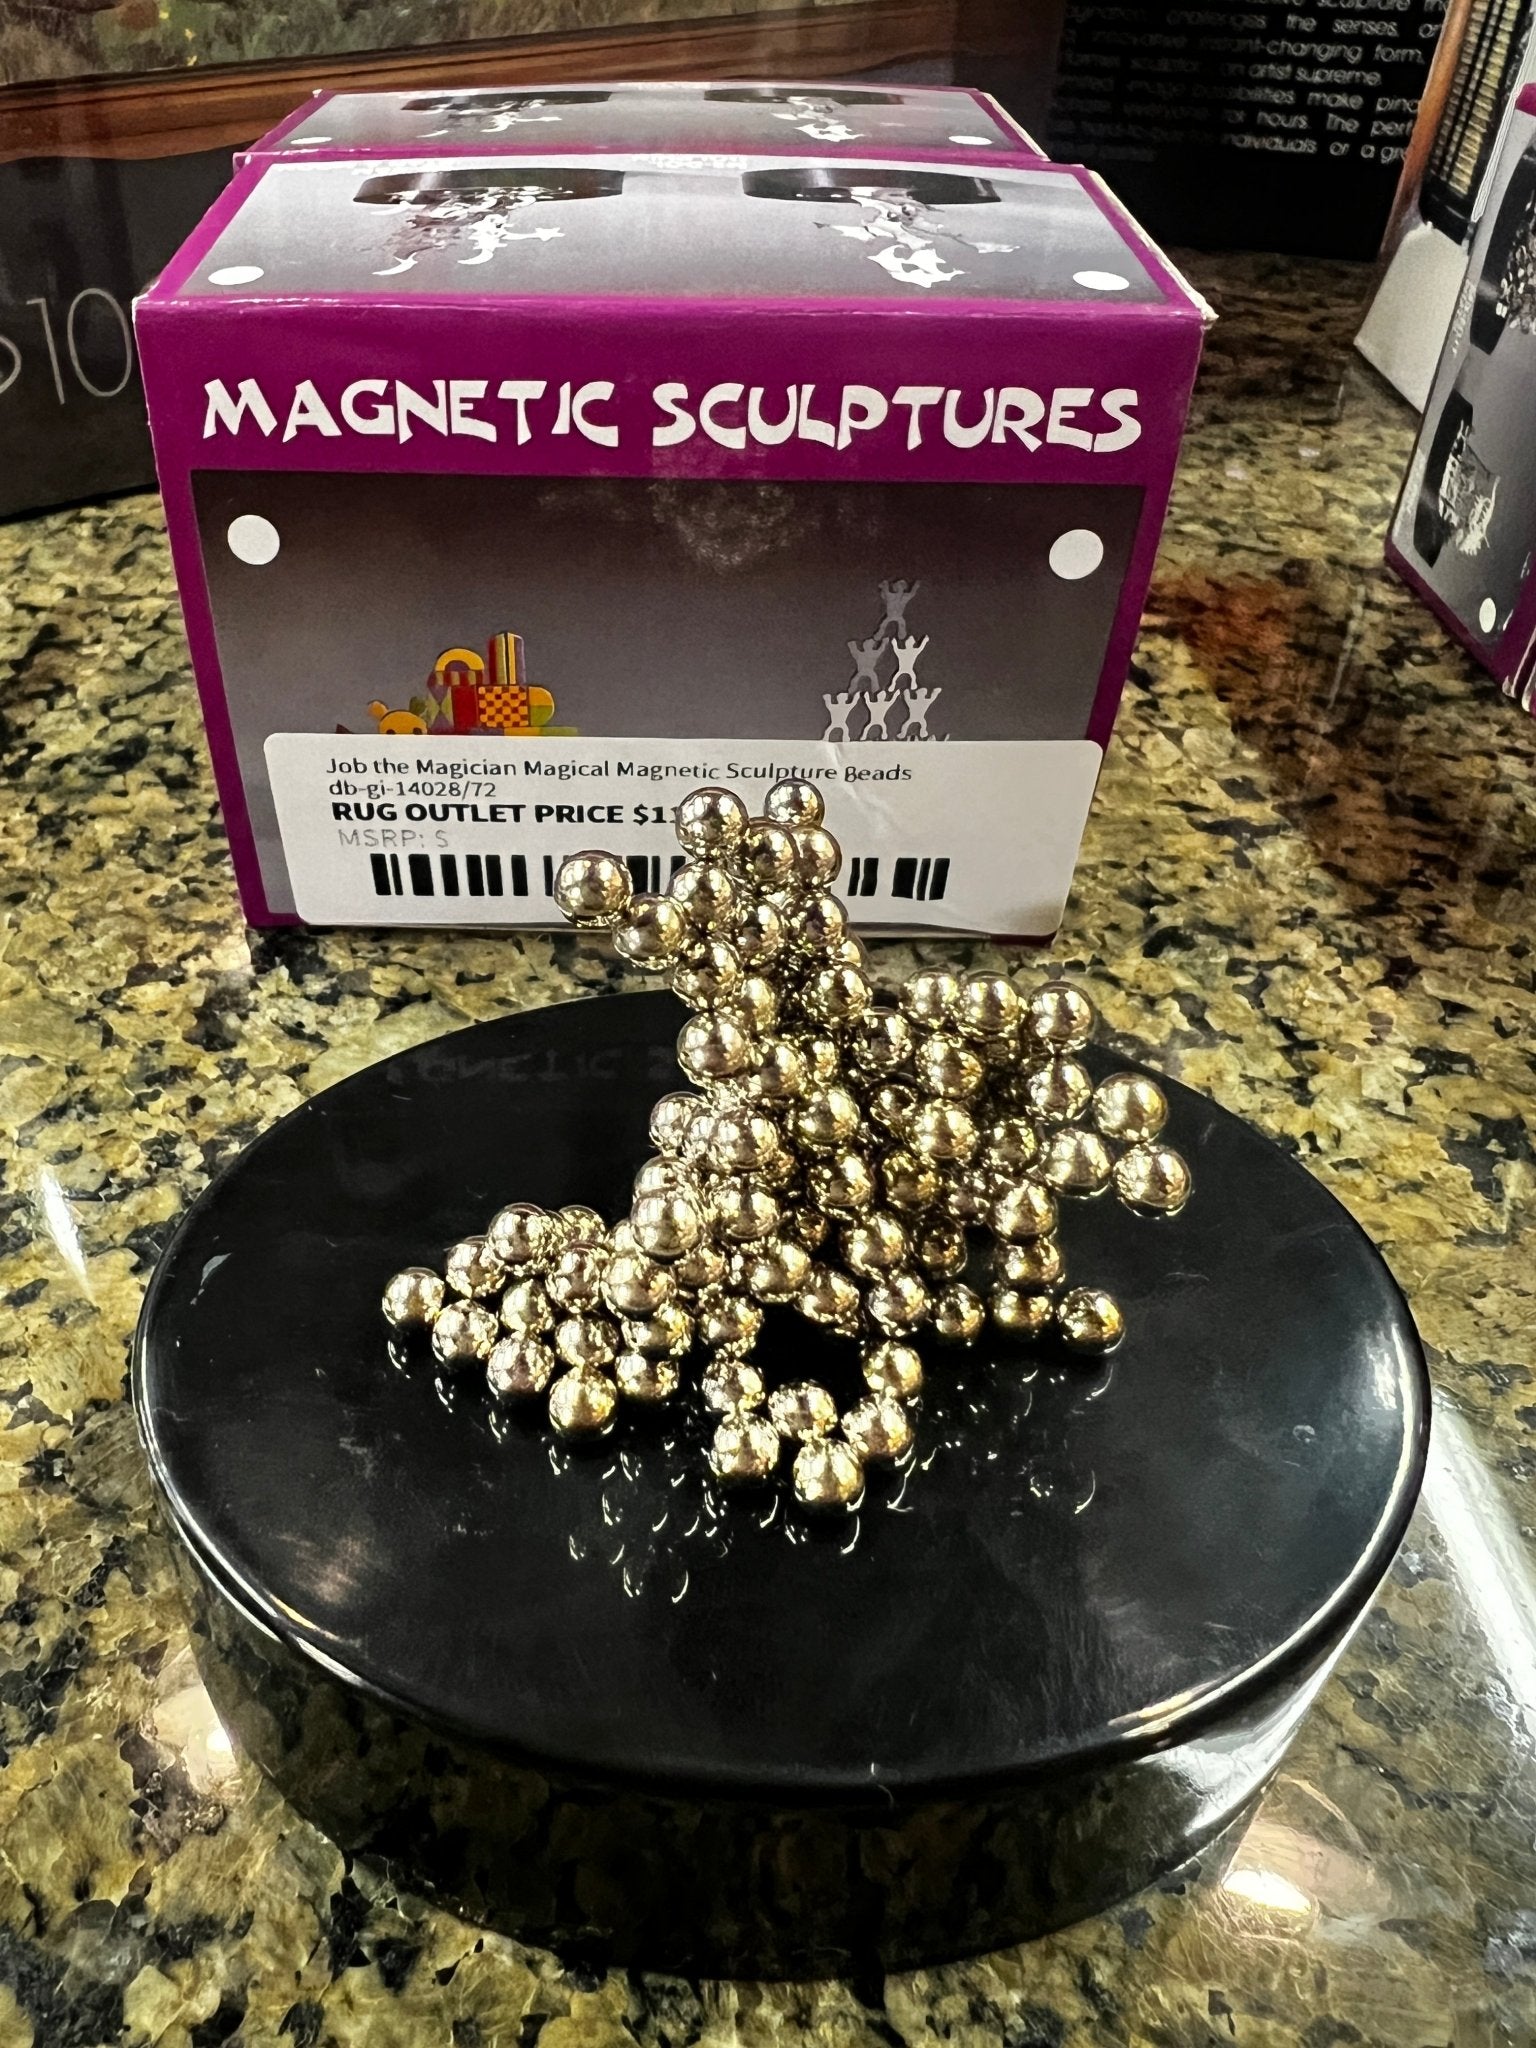 Job the Magician Magical Magnetic Sculpture Beads | Banana Manor Rug Company